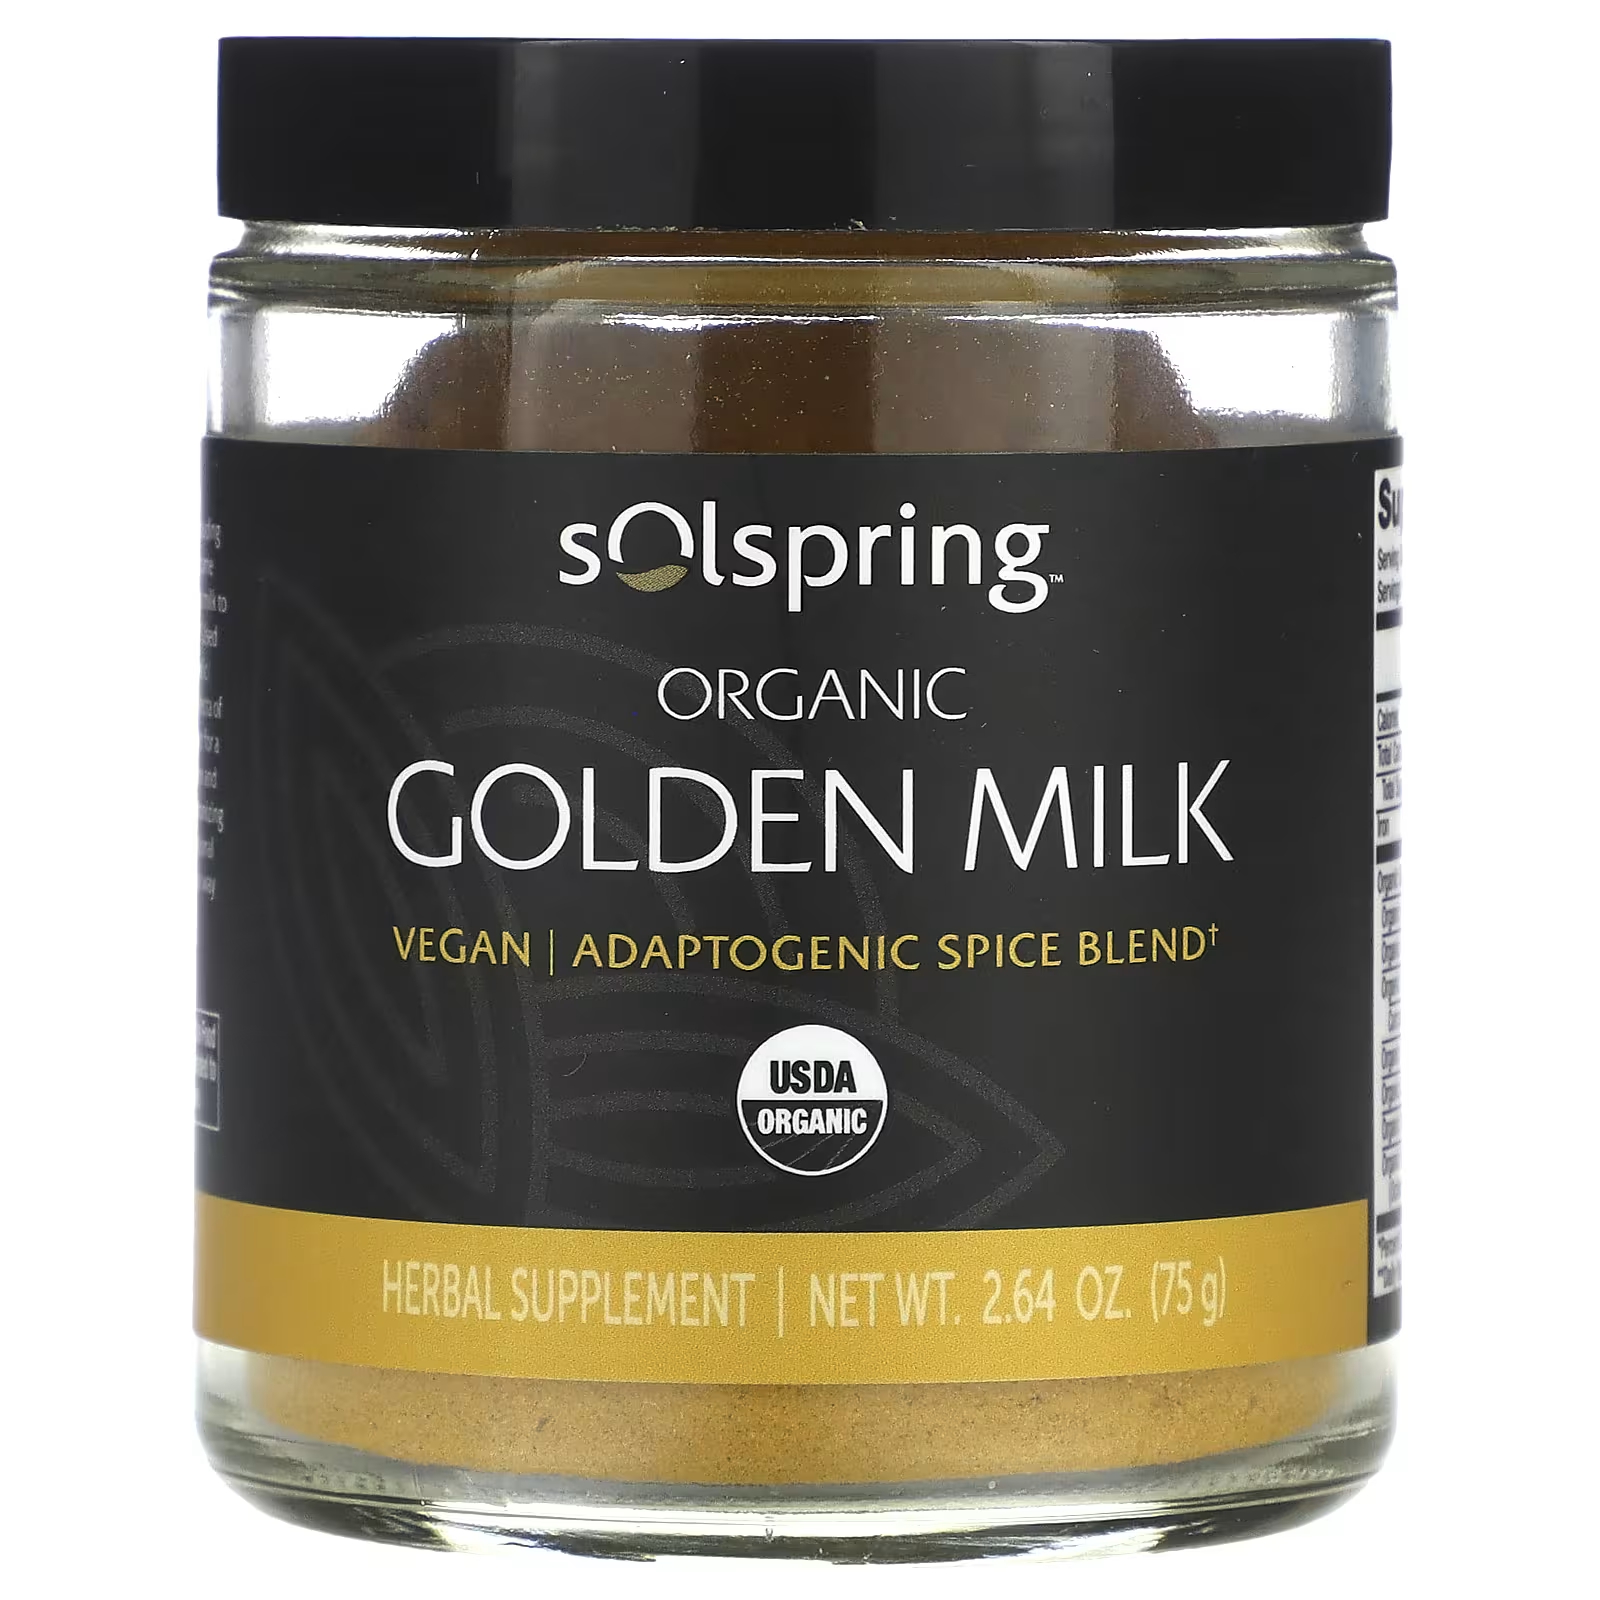 spice expert turmeric 10g Mercola Solspring Органическое золотое молоко 2,64 унции (75 г) Dr. Mercola